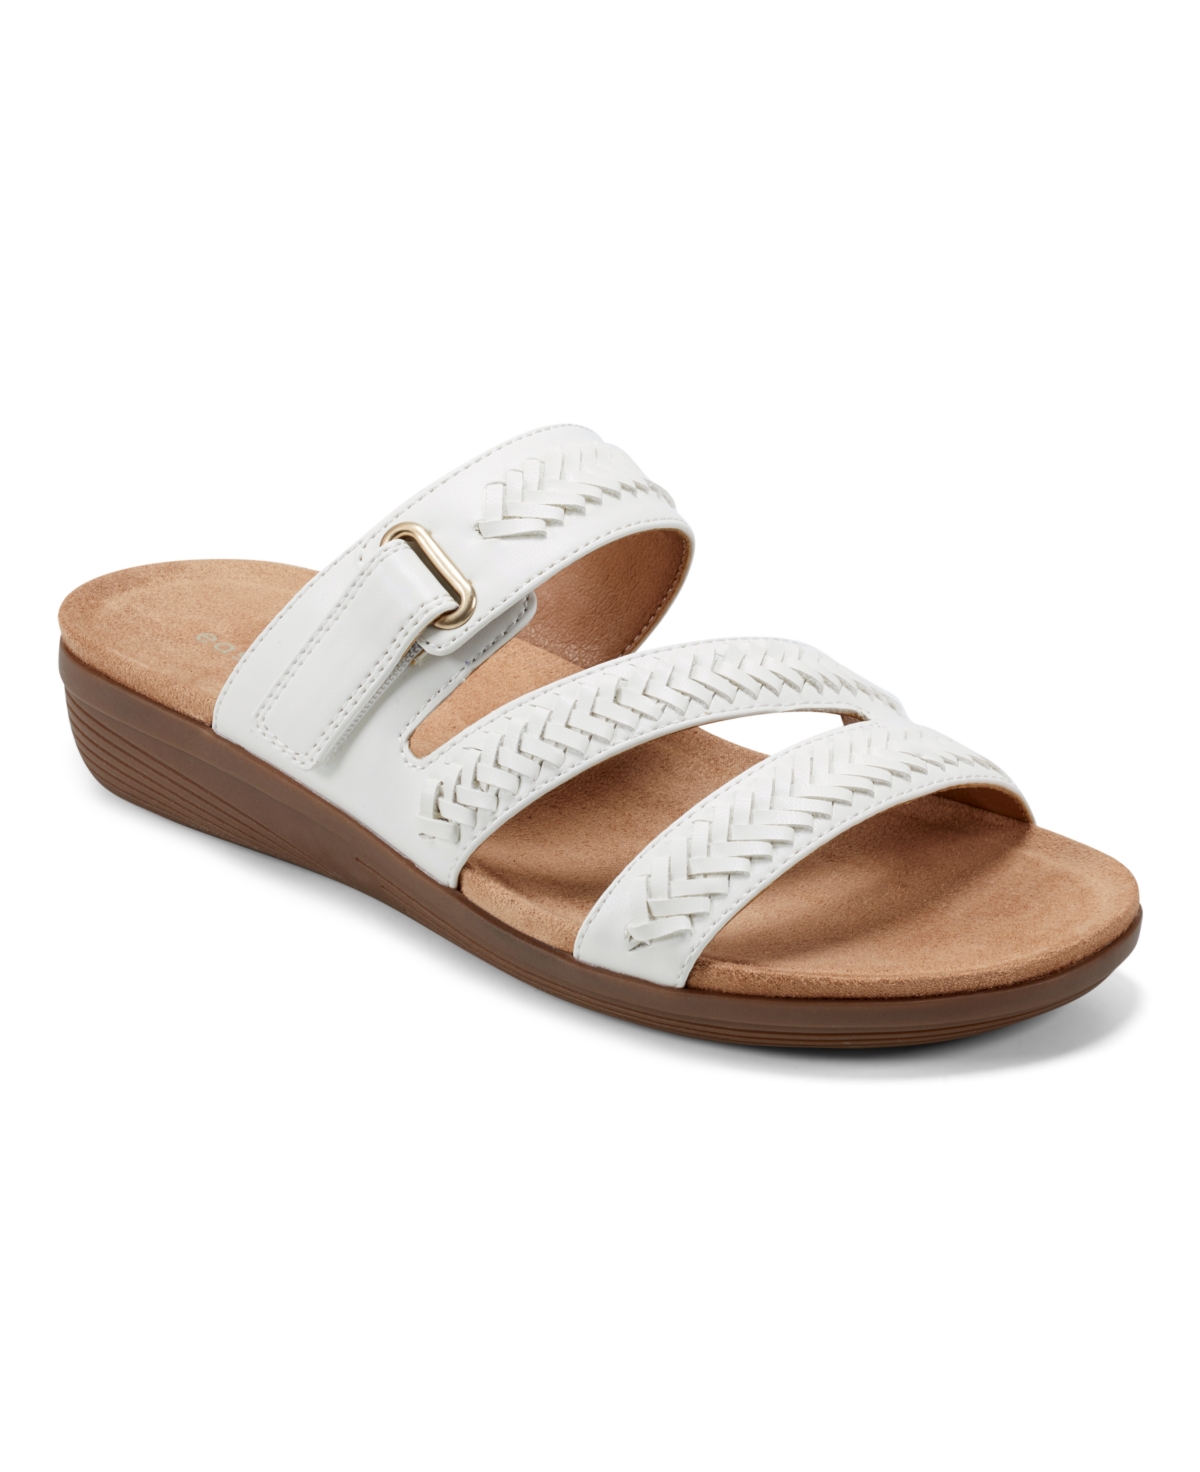 Women's Bateson Slip-On Open Toe Casual Sandals - White